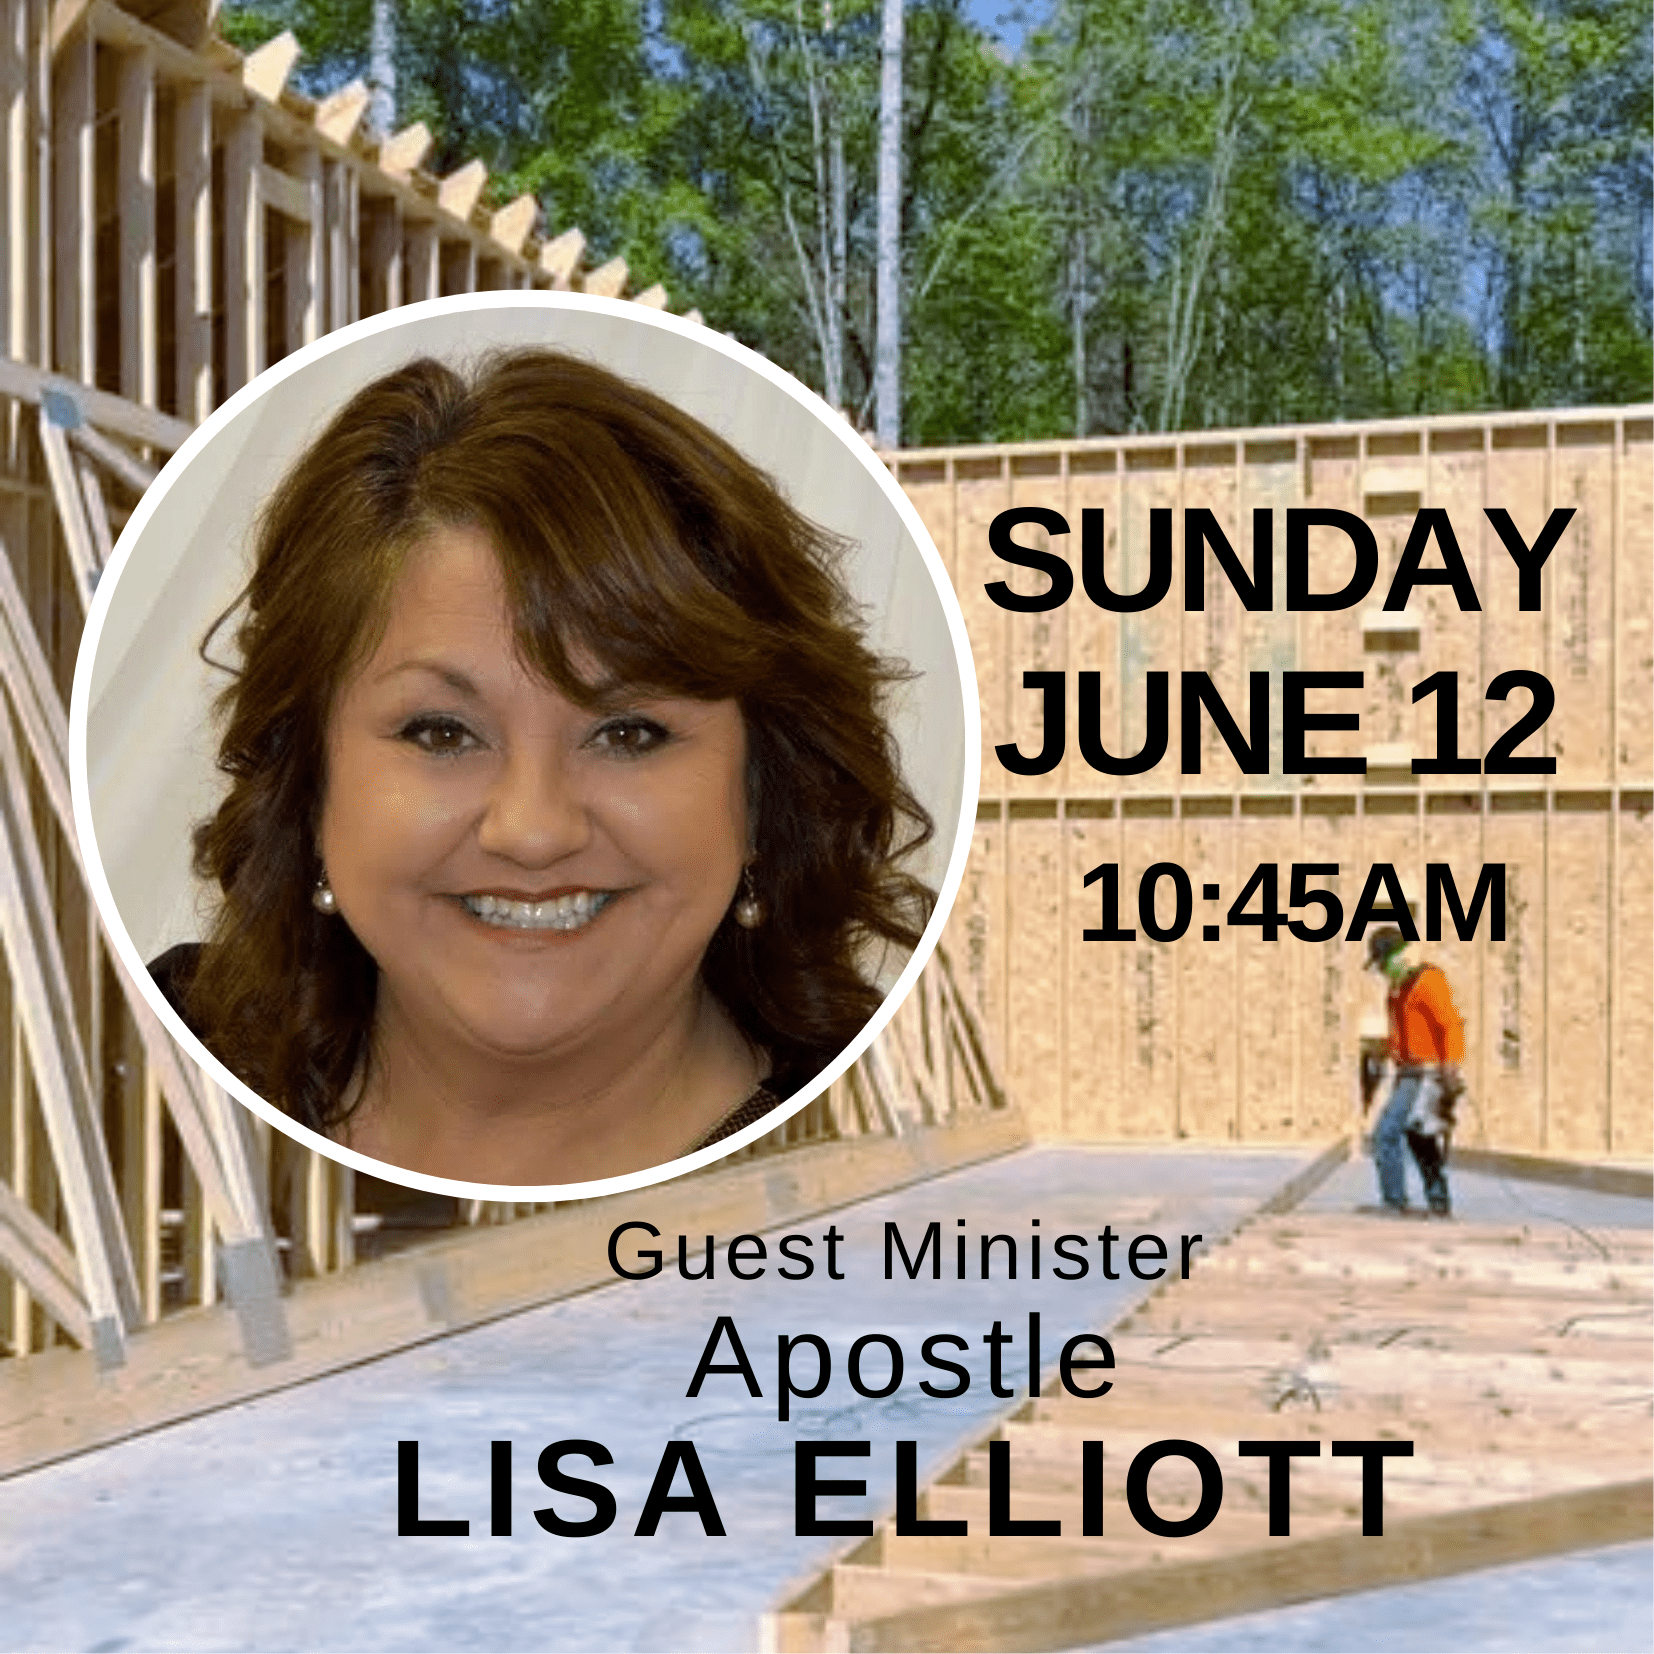 SPECIAL GUEST MINISTER APOSTLE LISA ELLIOTT